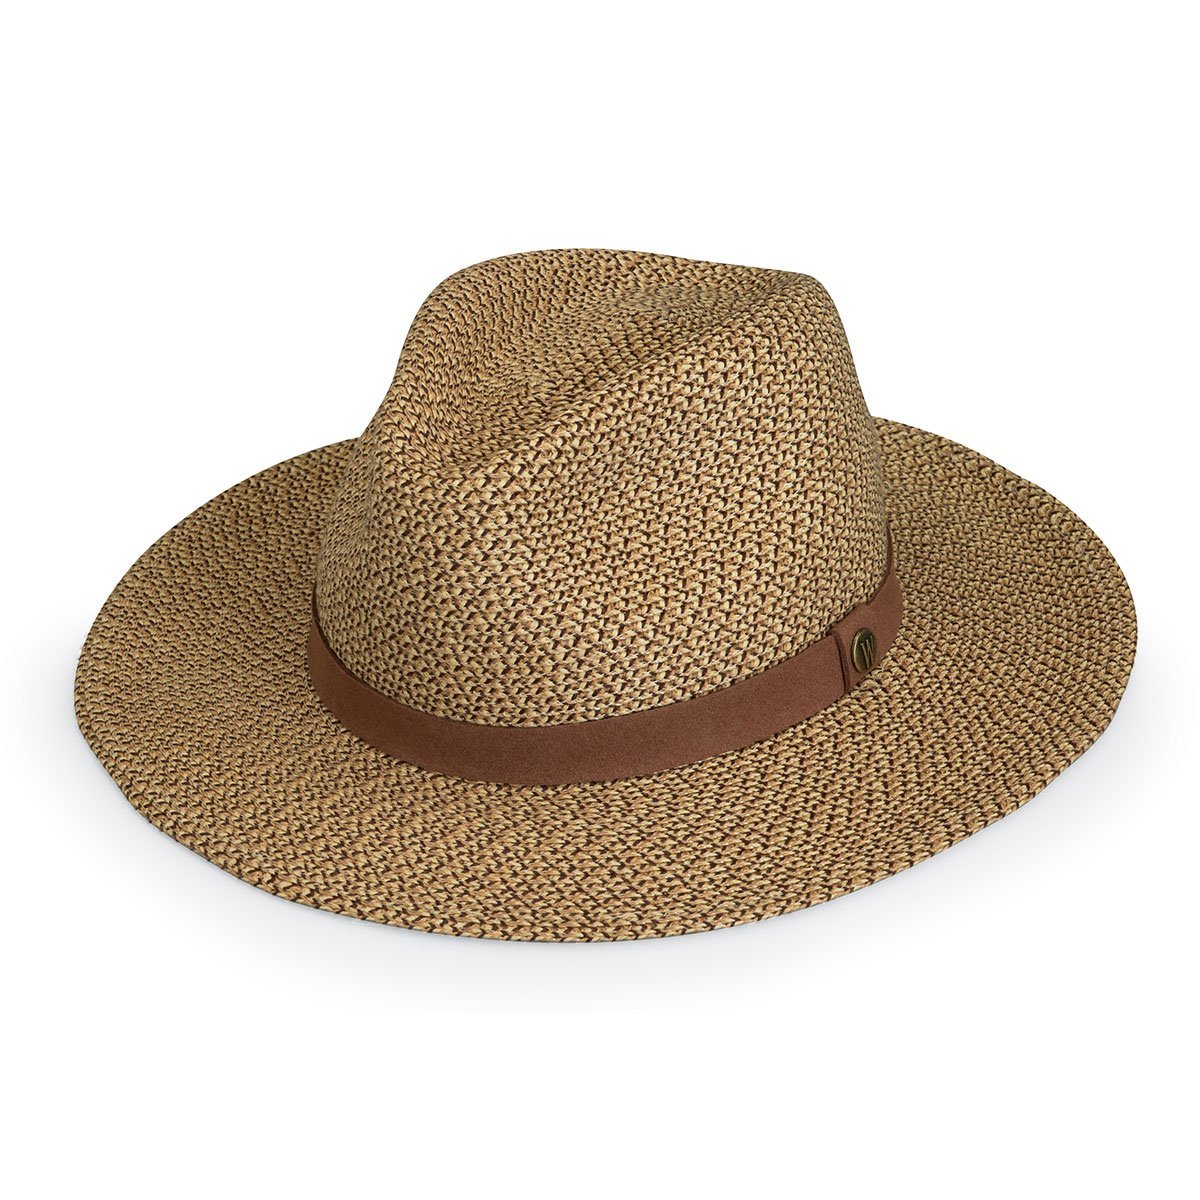 Wallaroo Hat Company: Men's Outback Hat - Natural